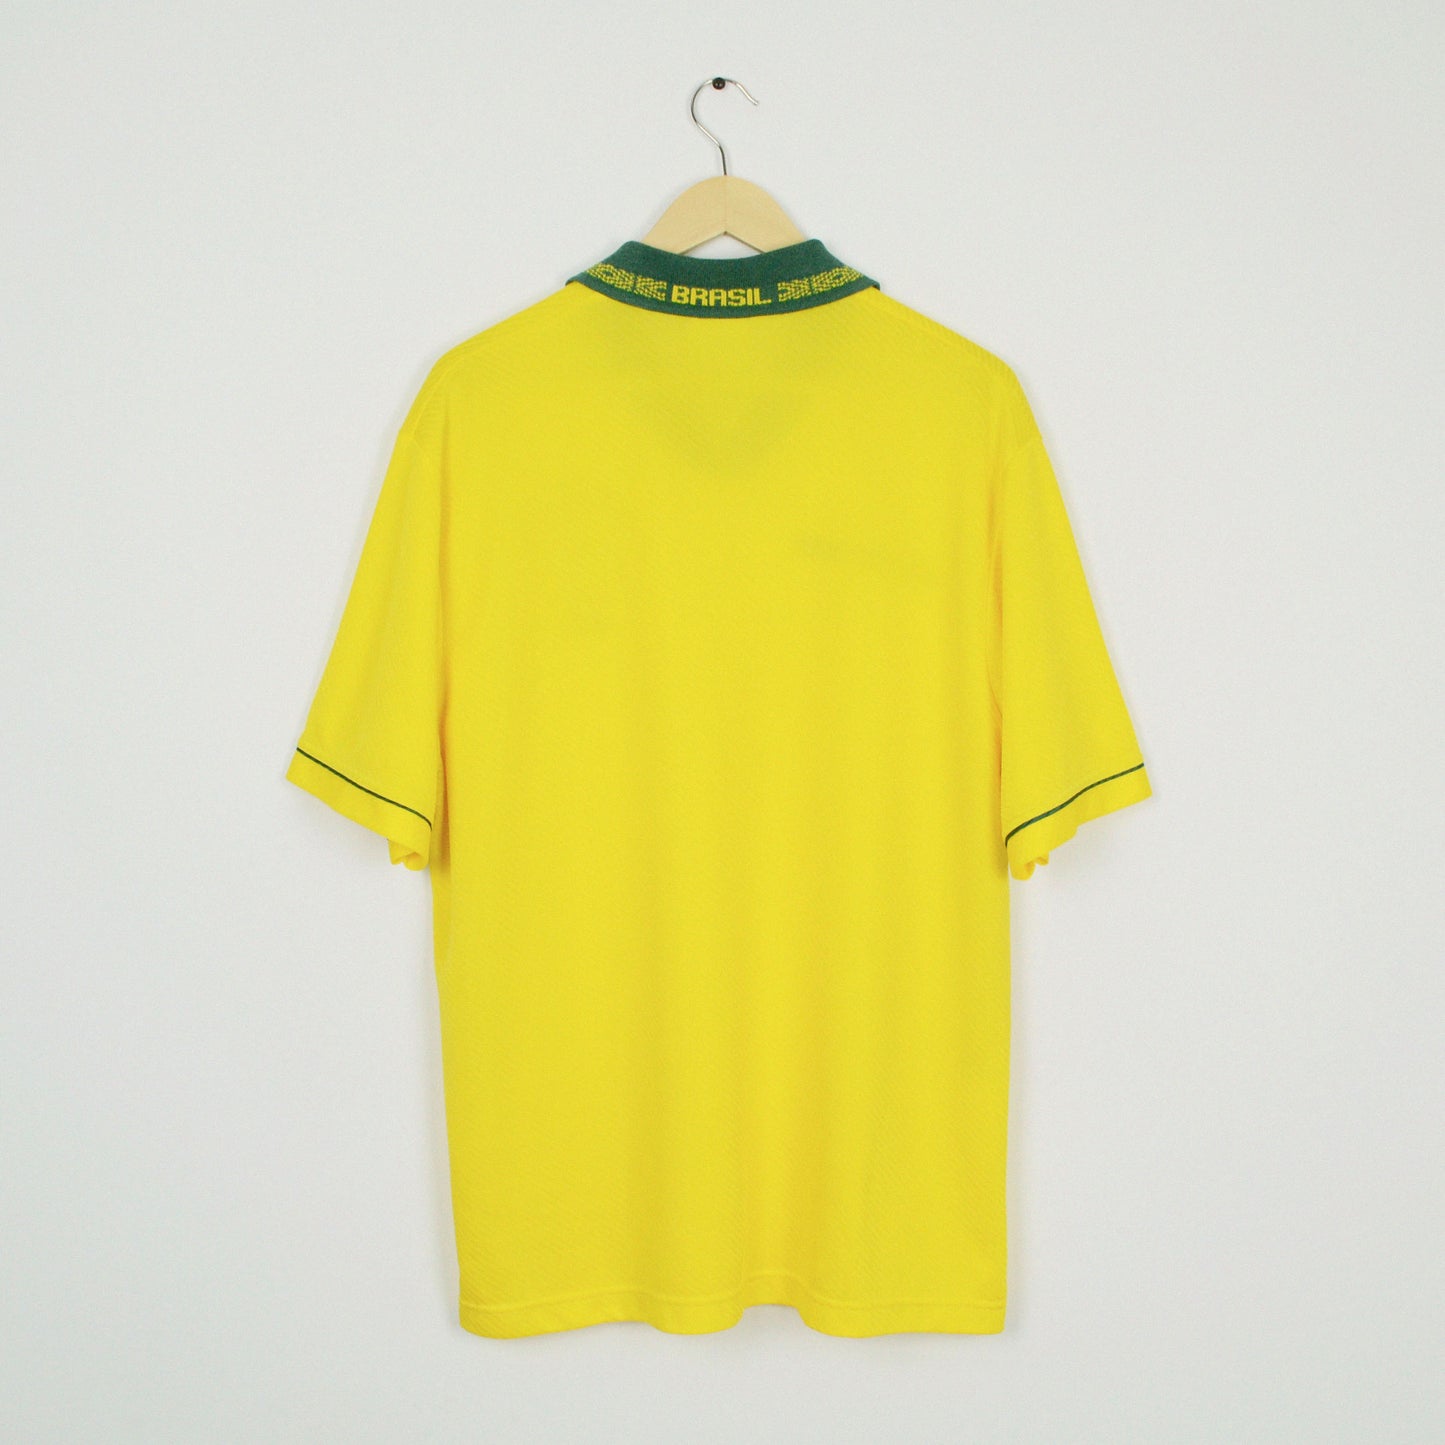 1993-94 Umbro Brazil Home Shirt L